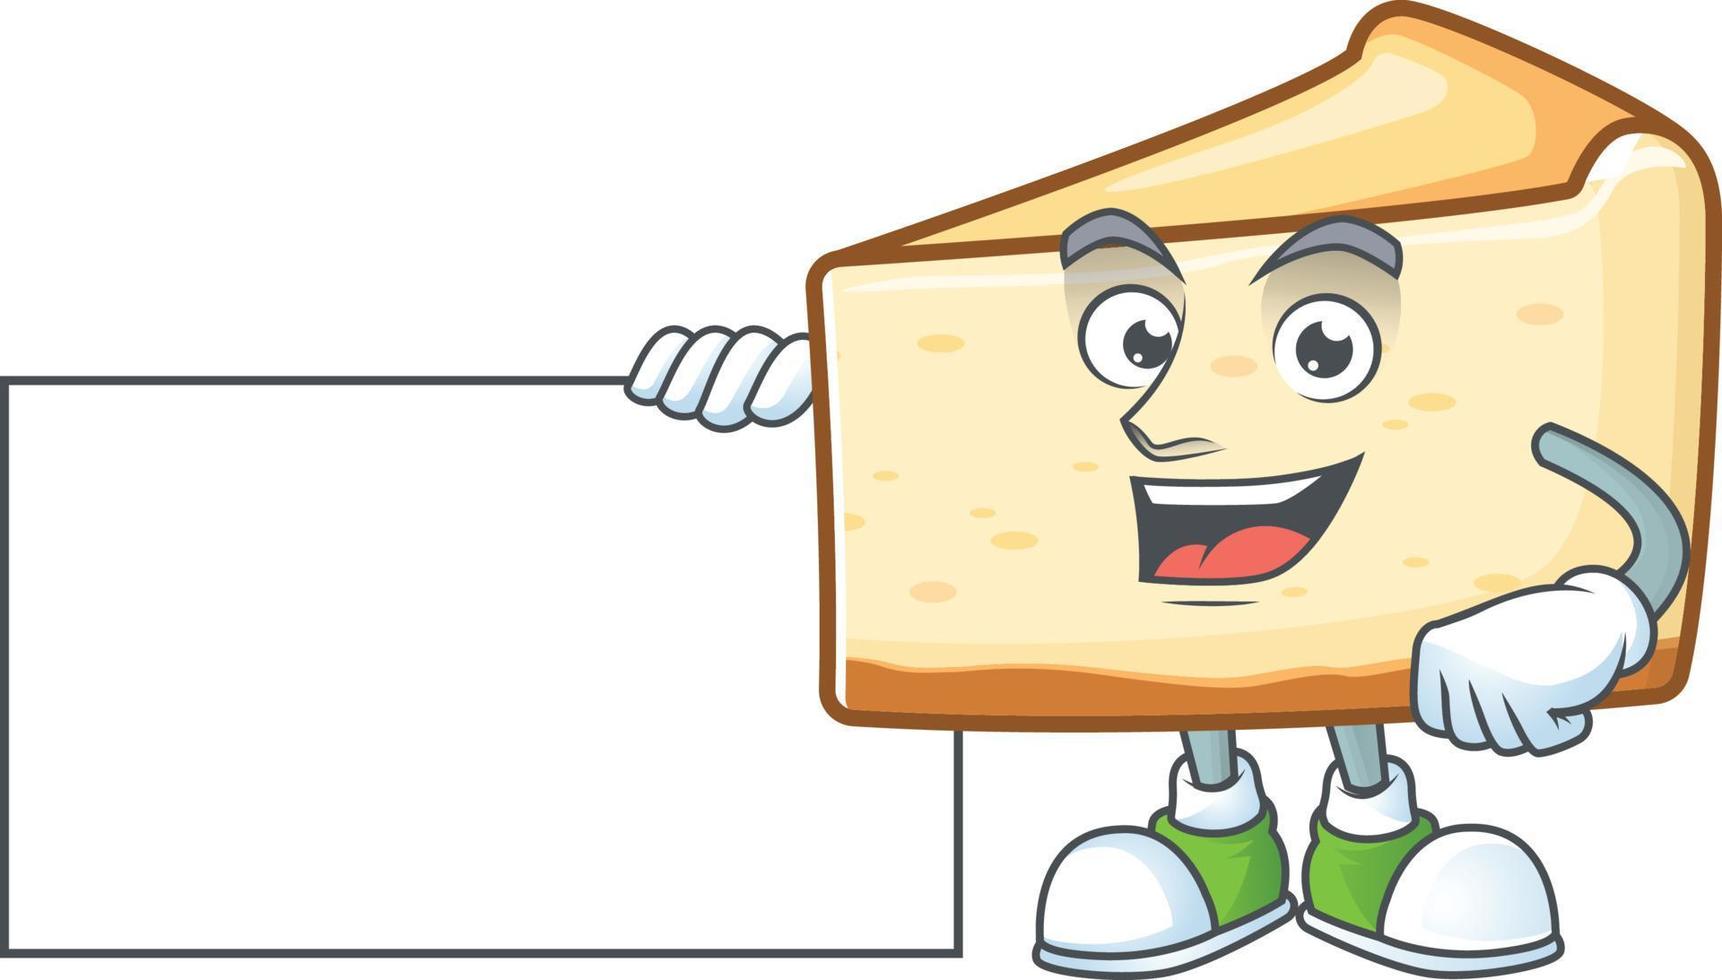 Cheese cake Cartoon character vector